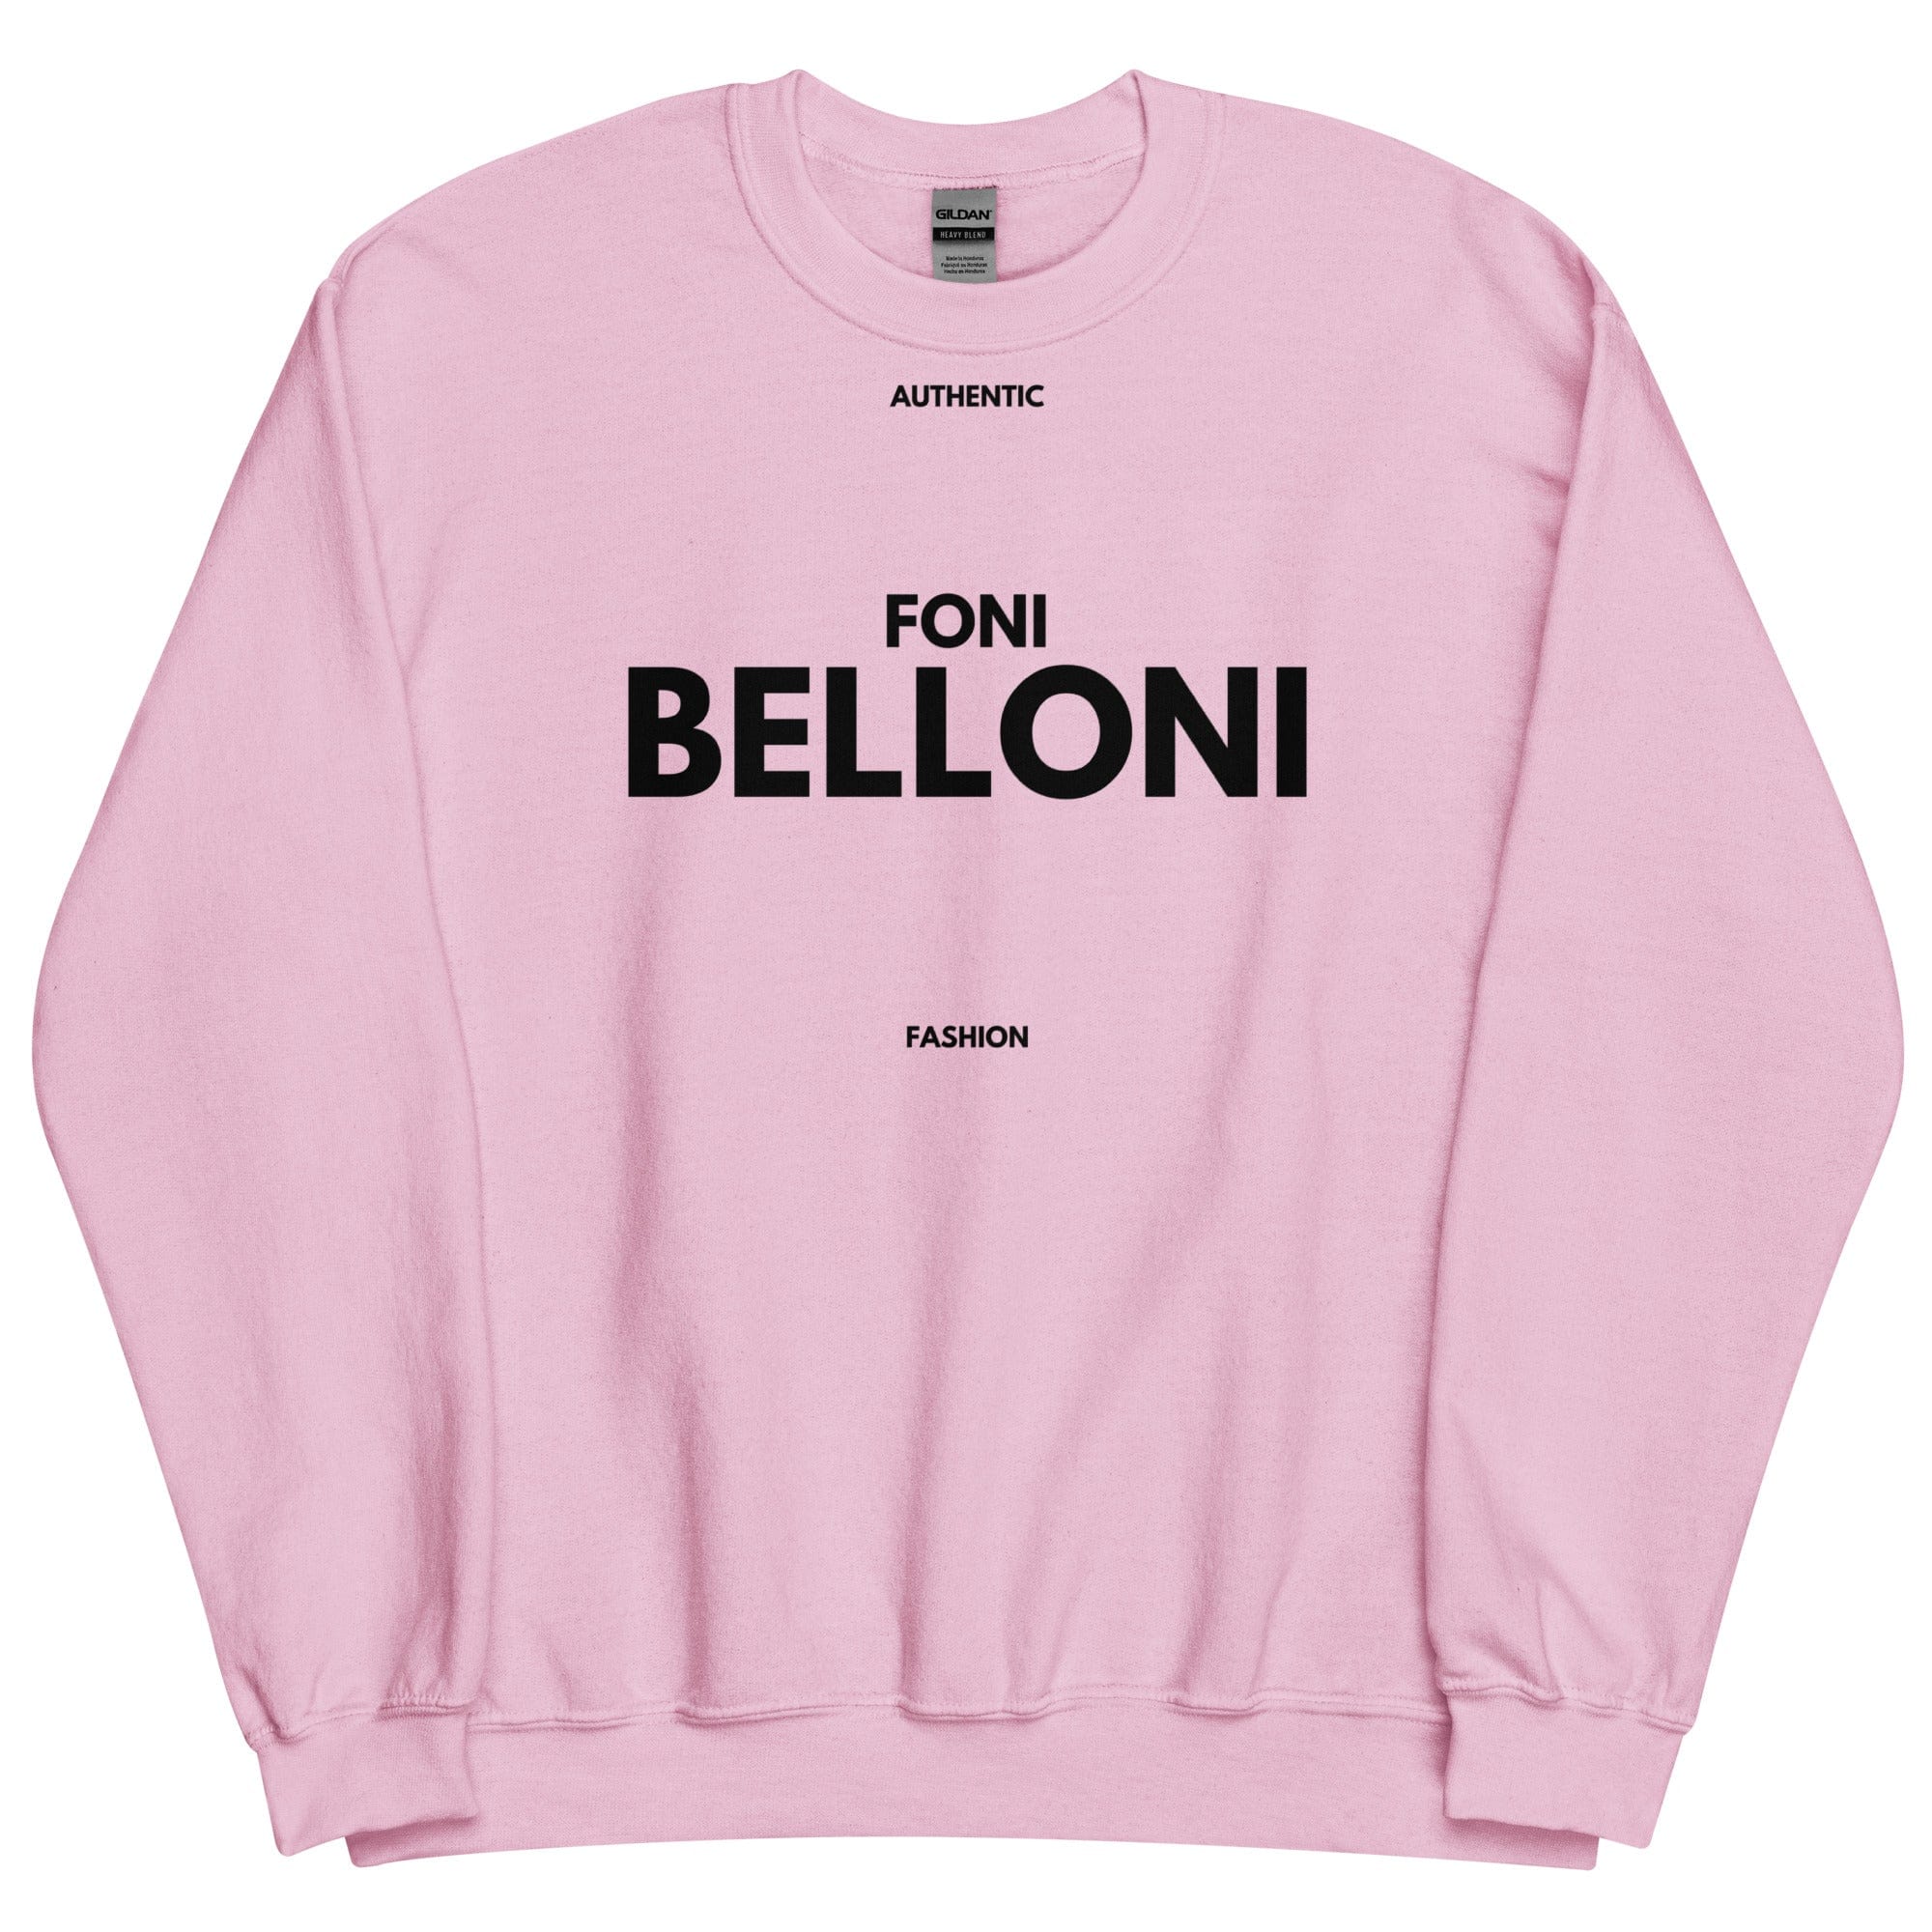 Foni Belloni Authentic Fashion Sweatshirt Light Pink / S Sweatshirt Jolly & Goode